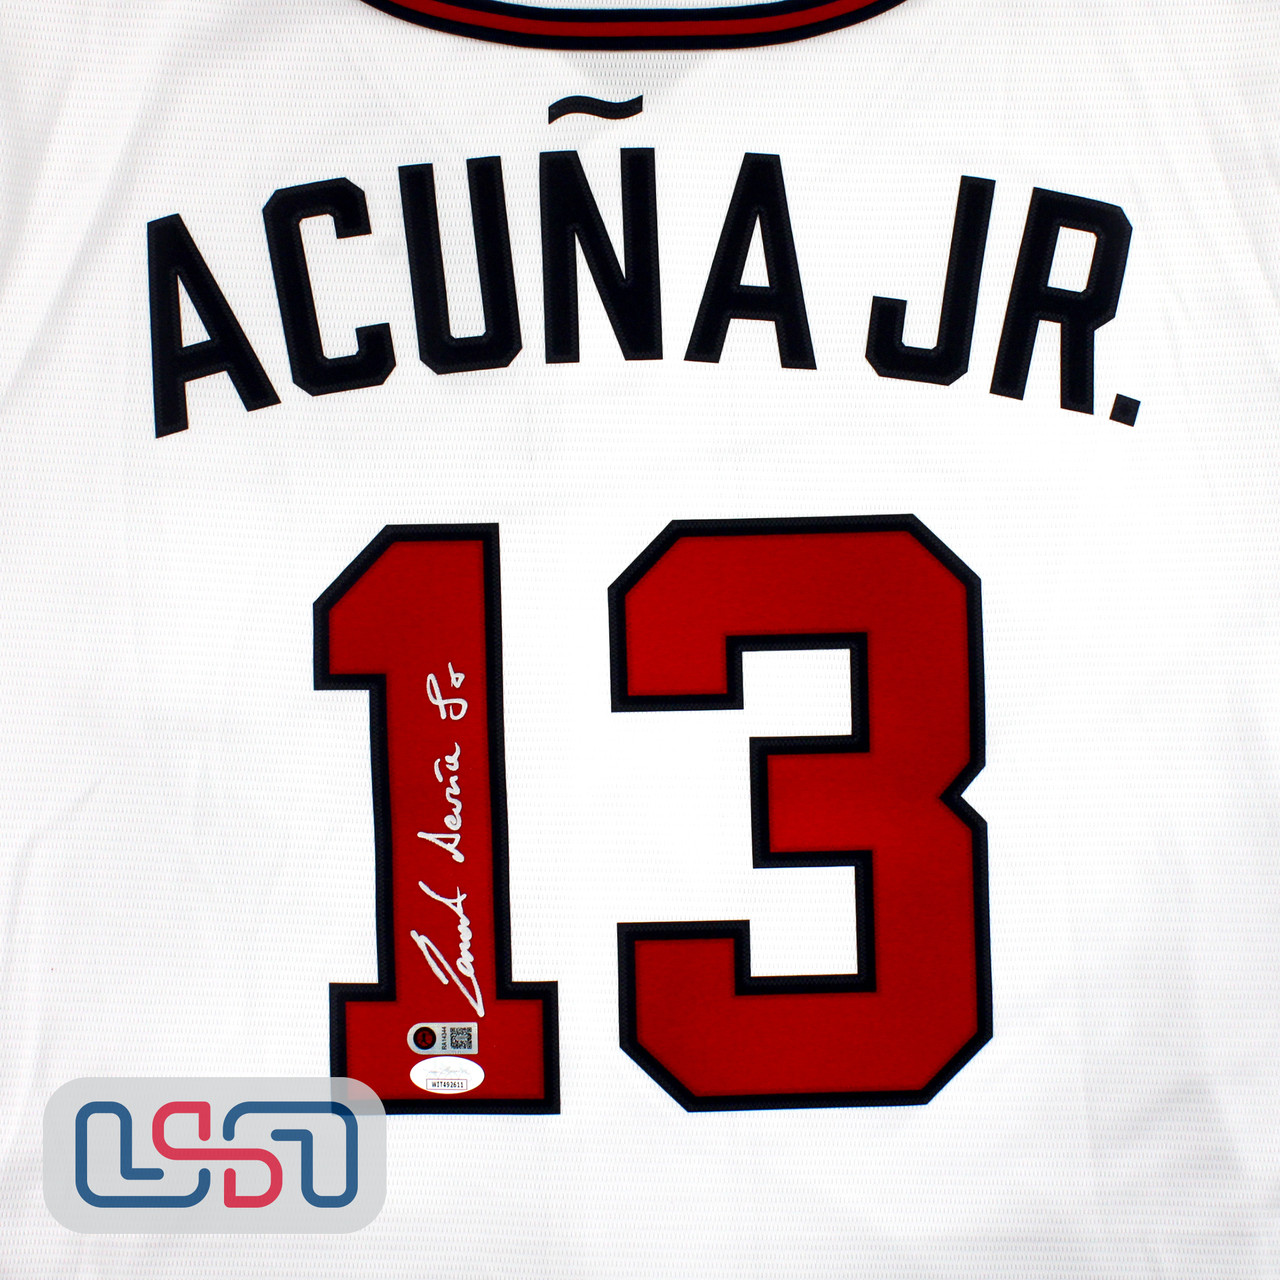 Ronald Acuna Jr. Signed/Autographed Braves Cream Nike Baseball